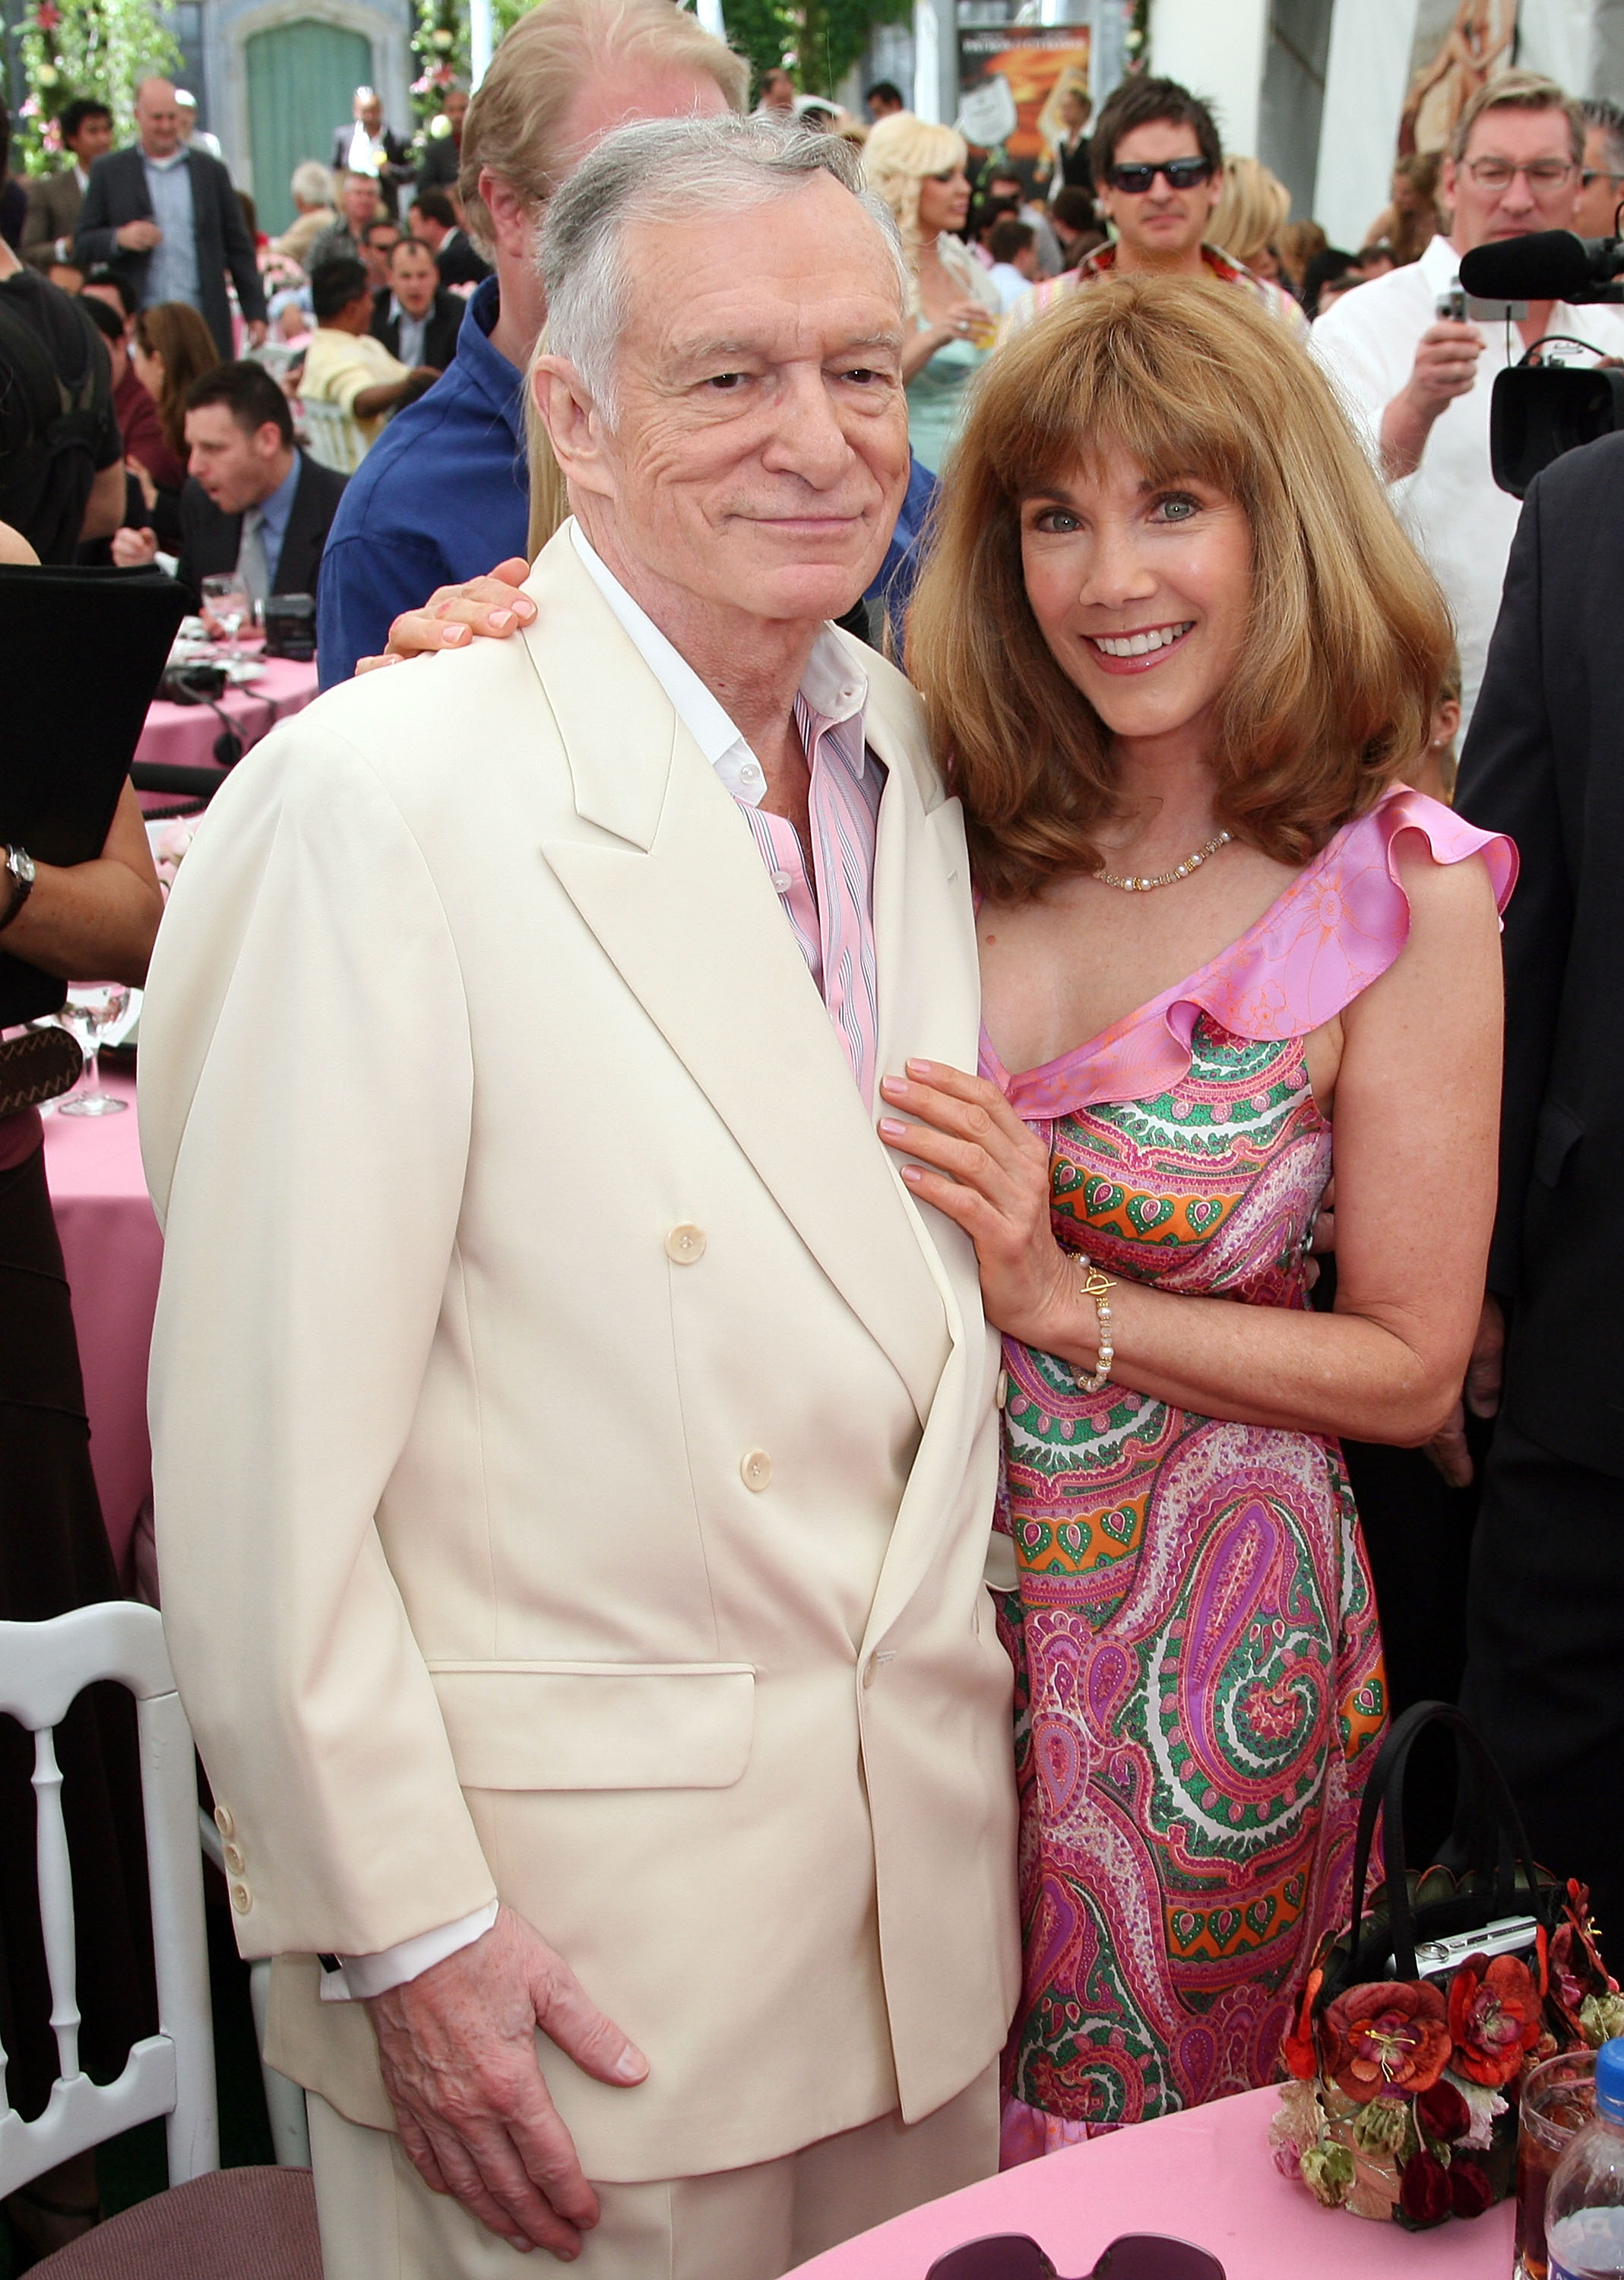 Hugh Hefner and Barbi Benton in Los Angeles in 2007 | Source: Getty Images